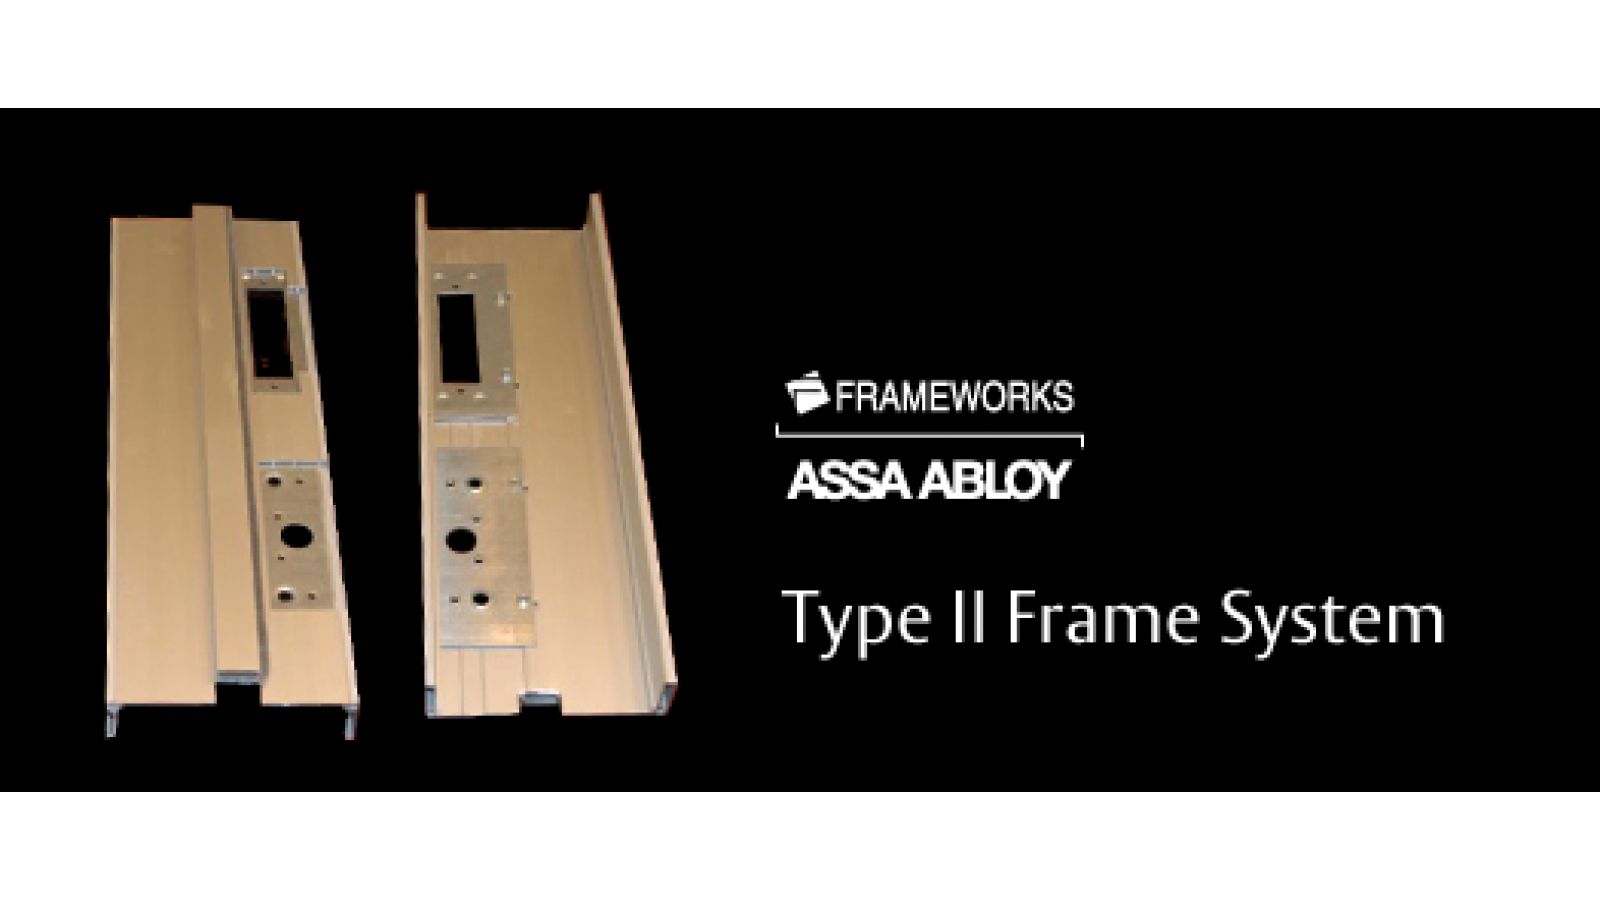 Frameworks Aluminum Type II Frame